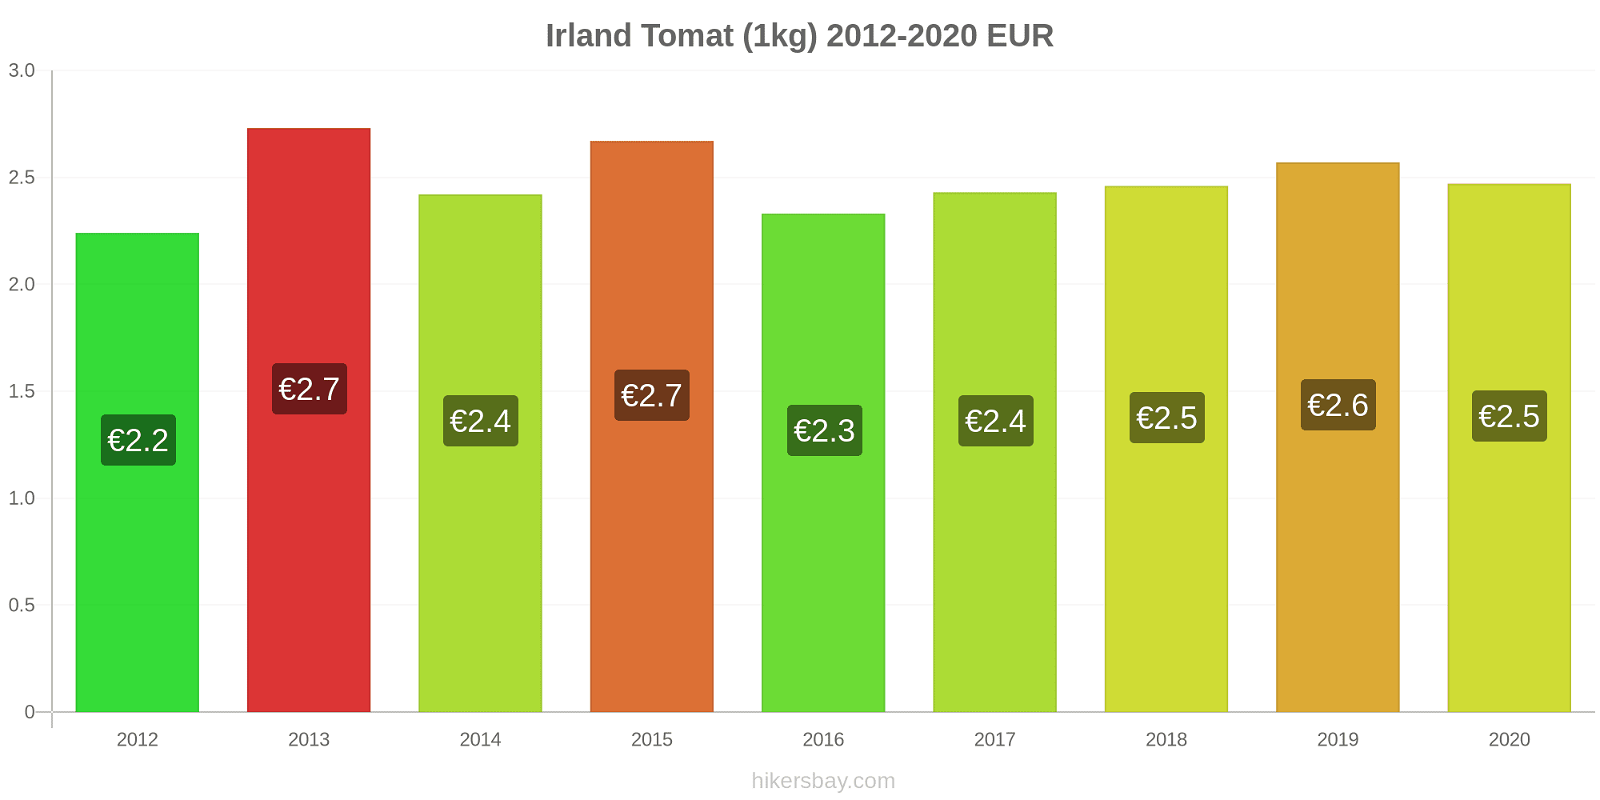 Irland prisendringer Tomat (1kg) hikersbay.com